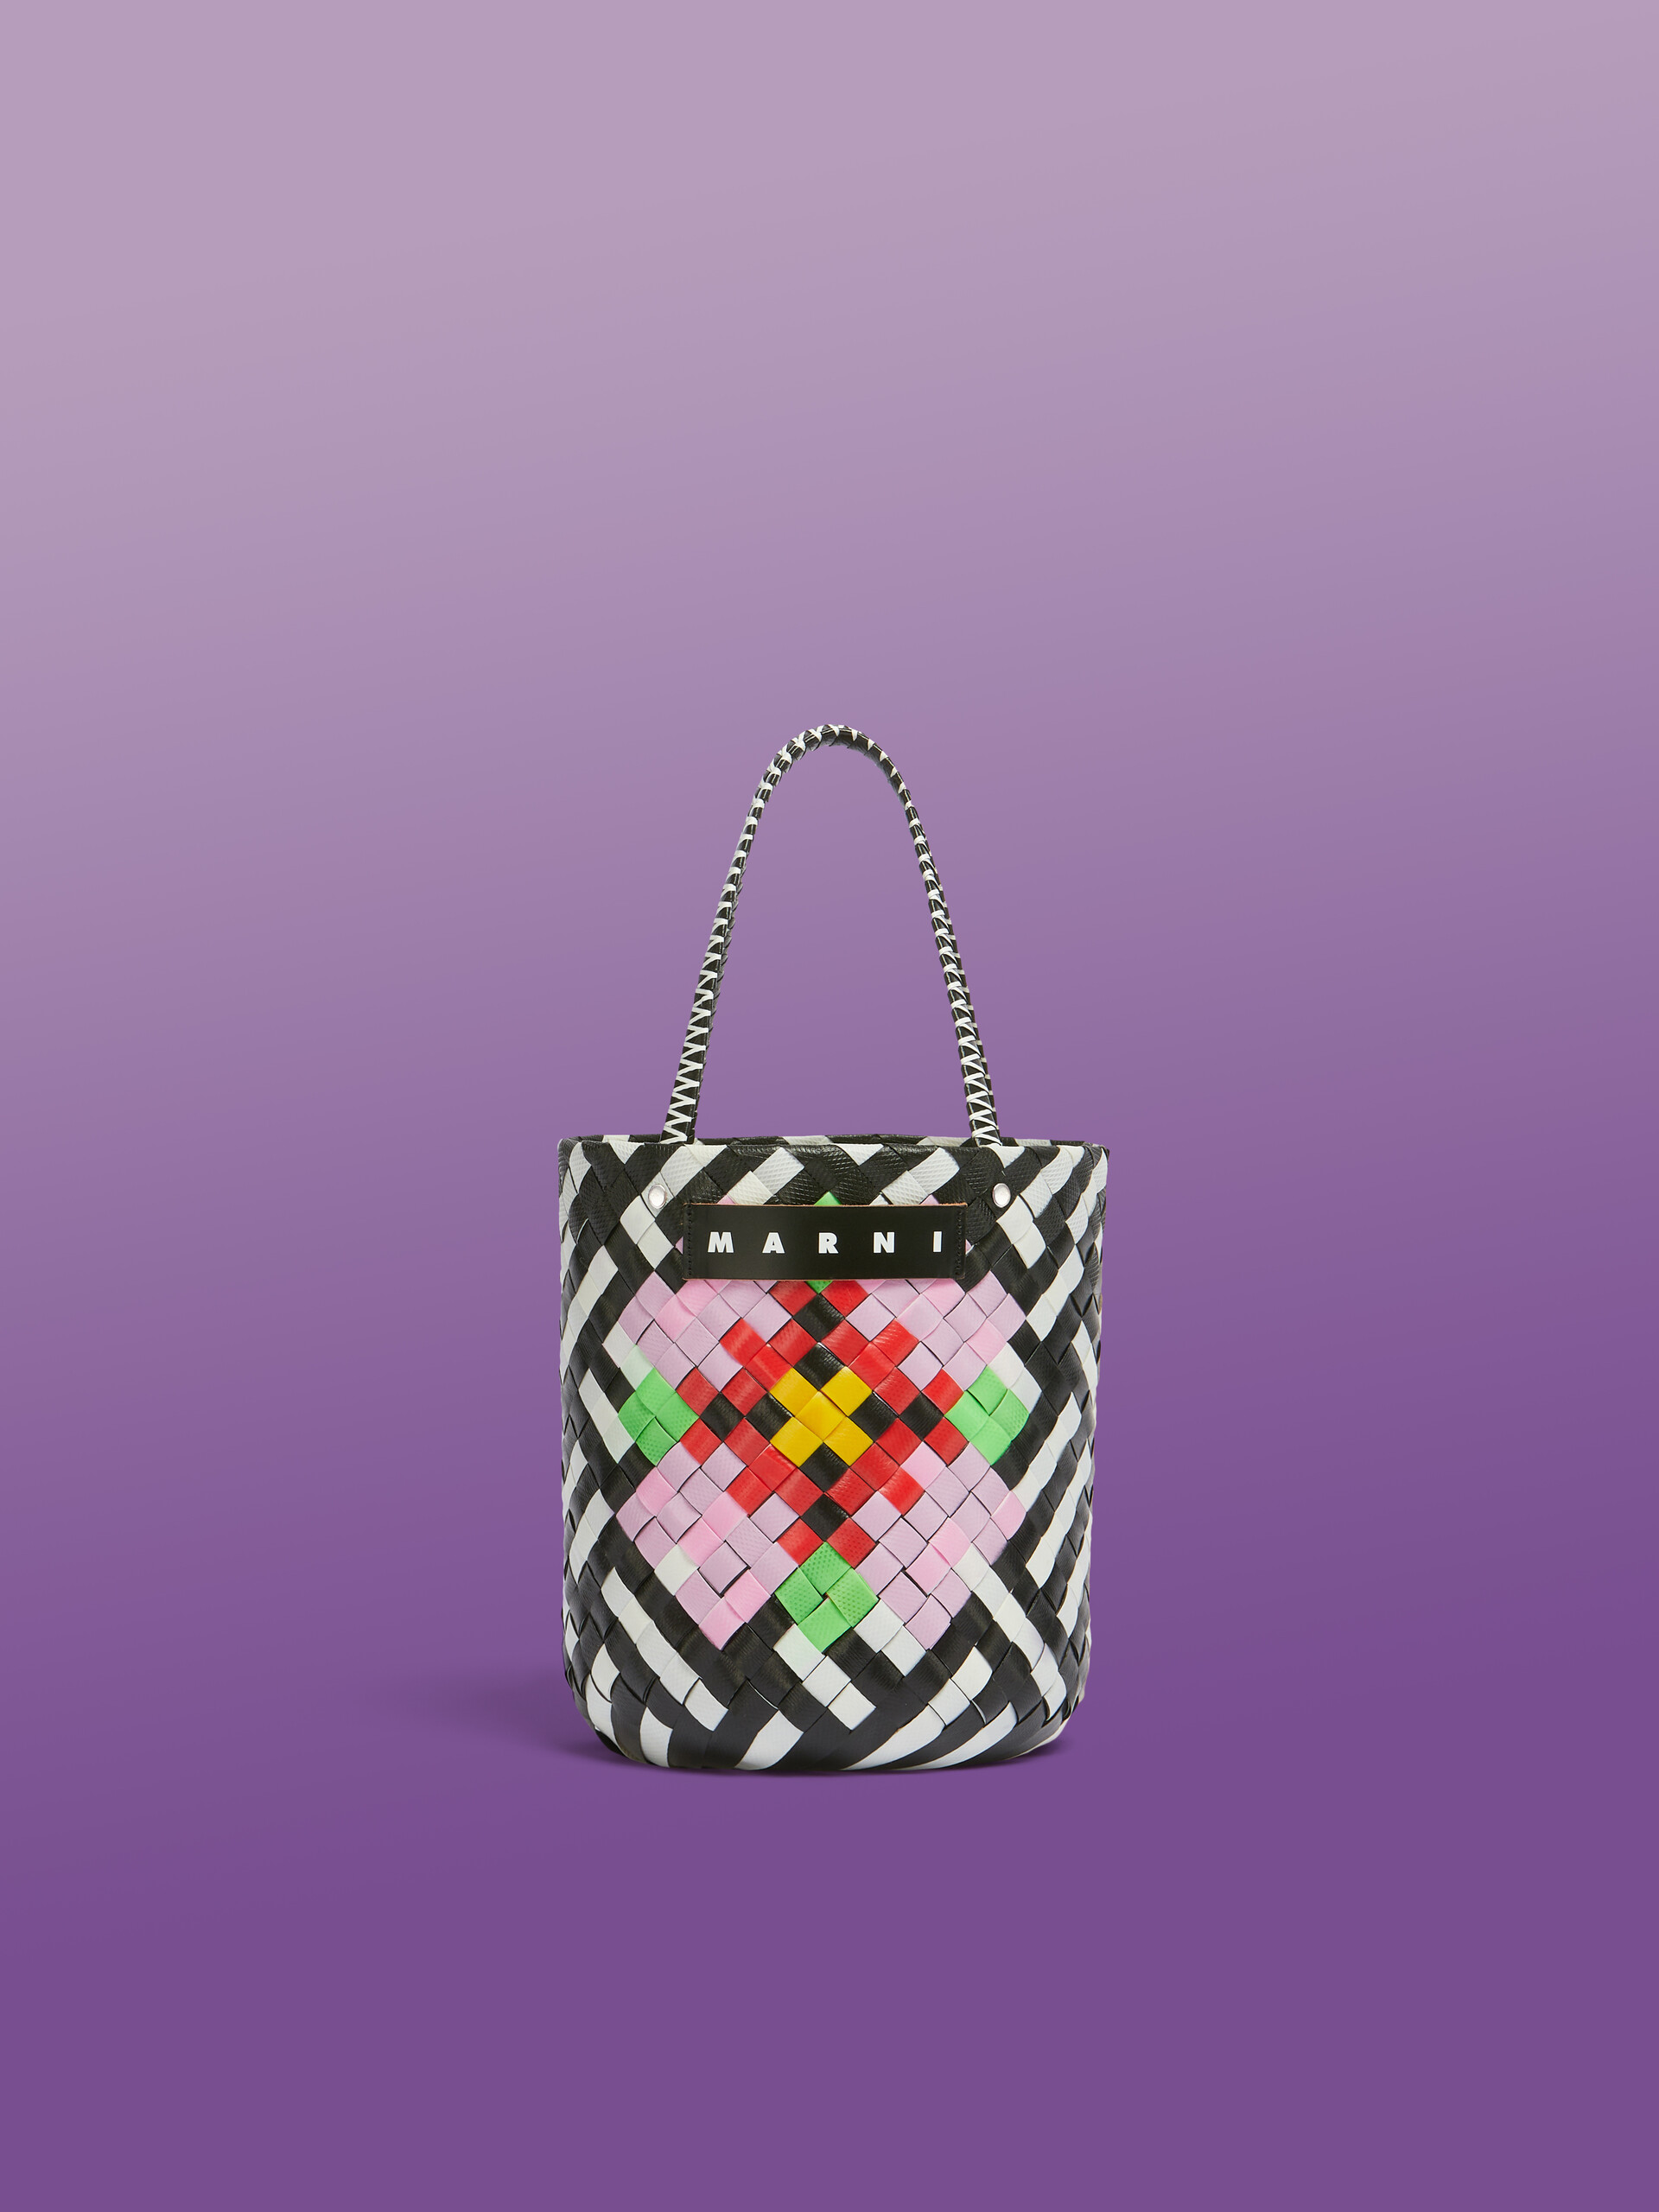 Peach flower MARNI MARKET BUCKET bag - Shopping Bags - Image 1